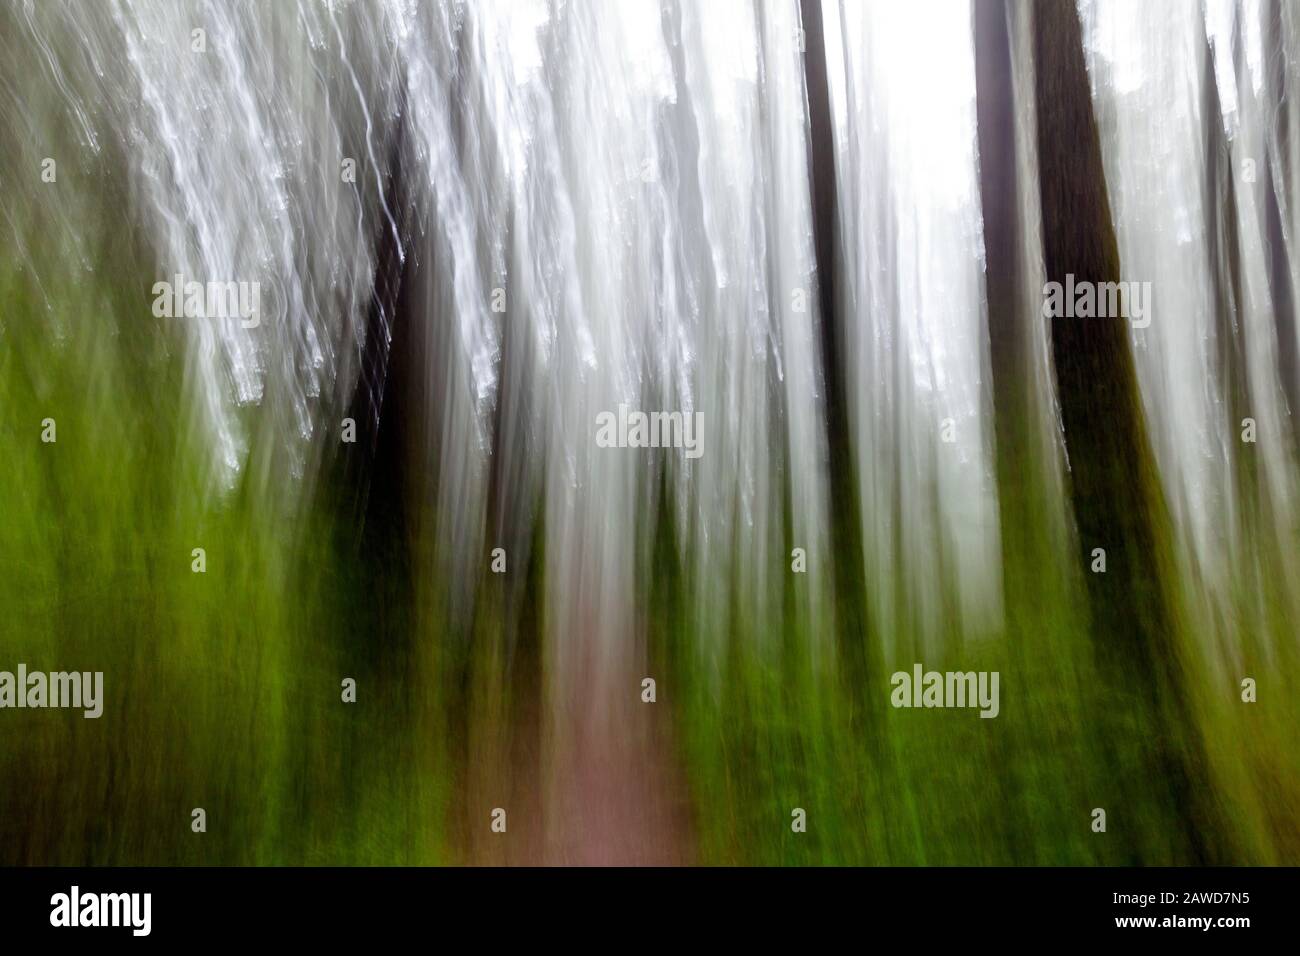 WA17409-00....WASHINGTON - Abstract trees in Olympic National Park. Stock Photo